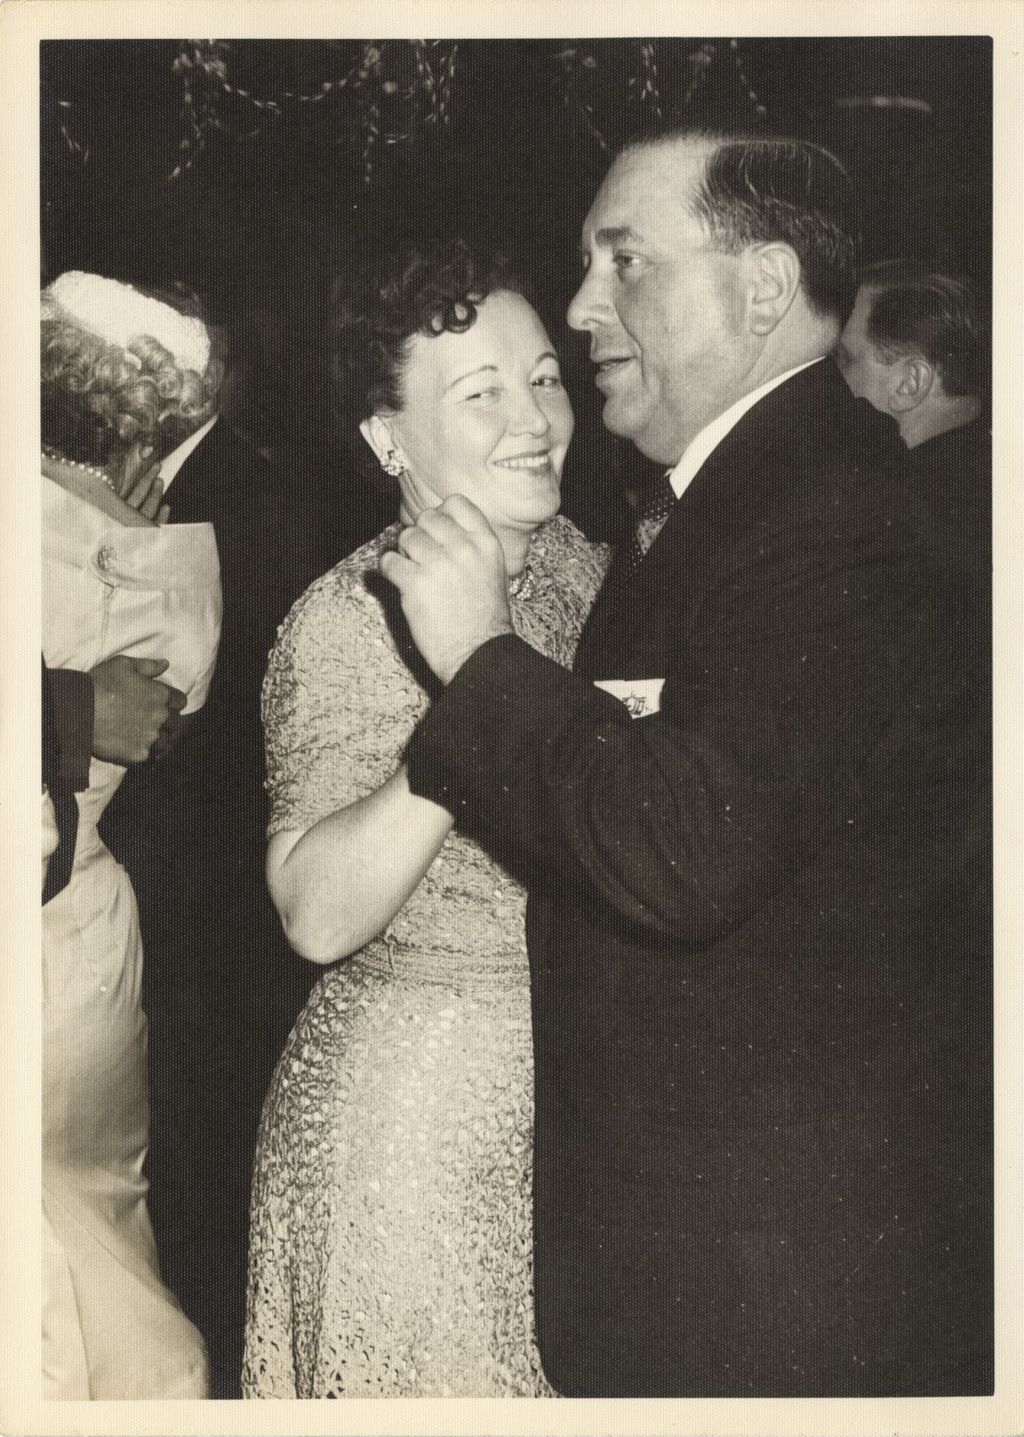 Eleanor and Richard J. Daley dancing